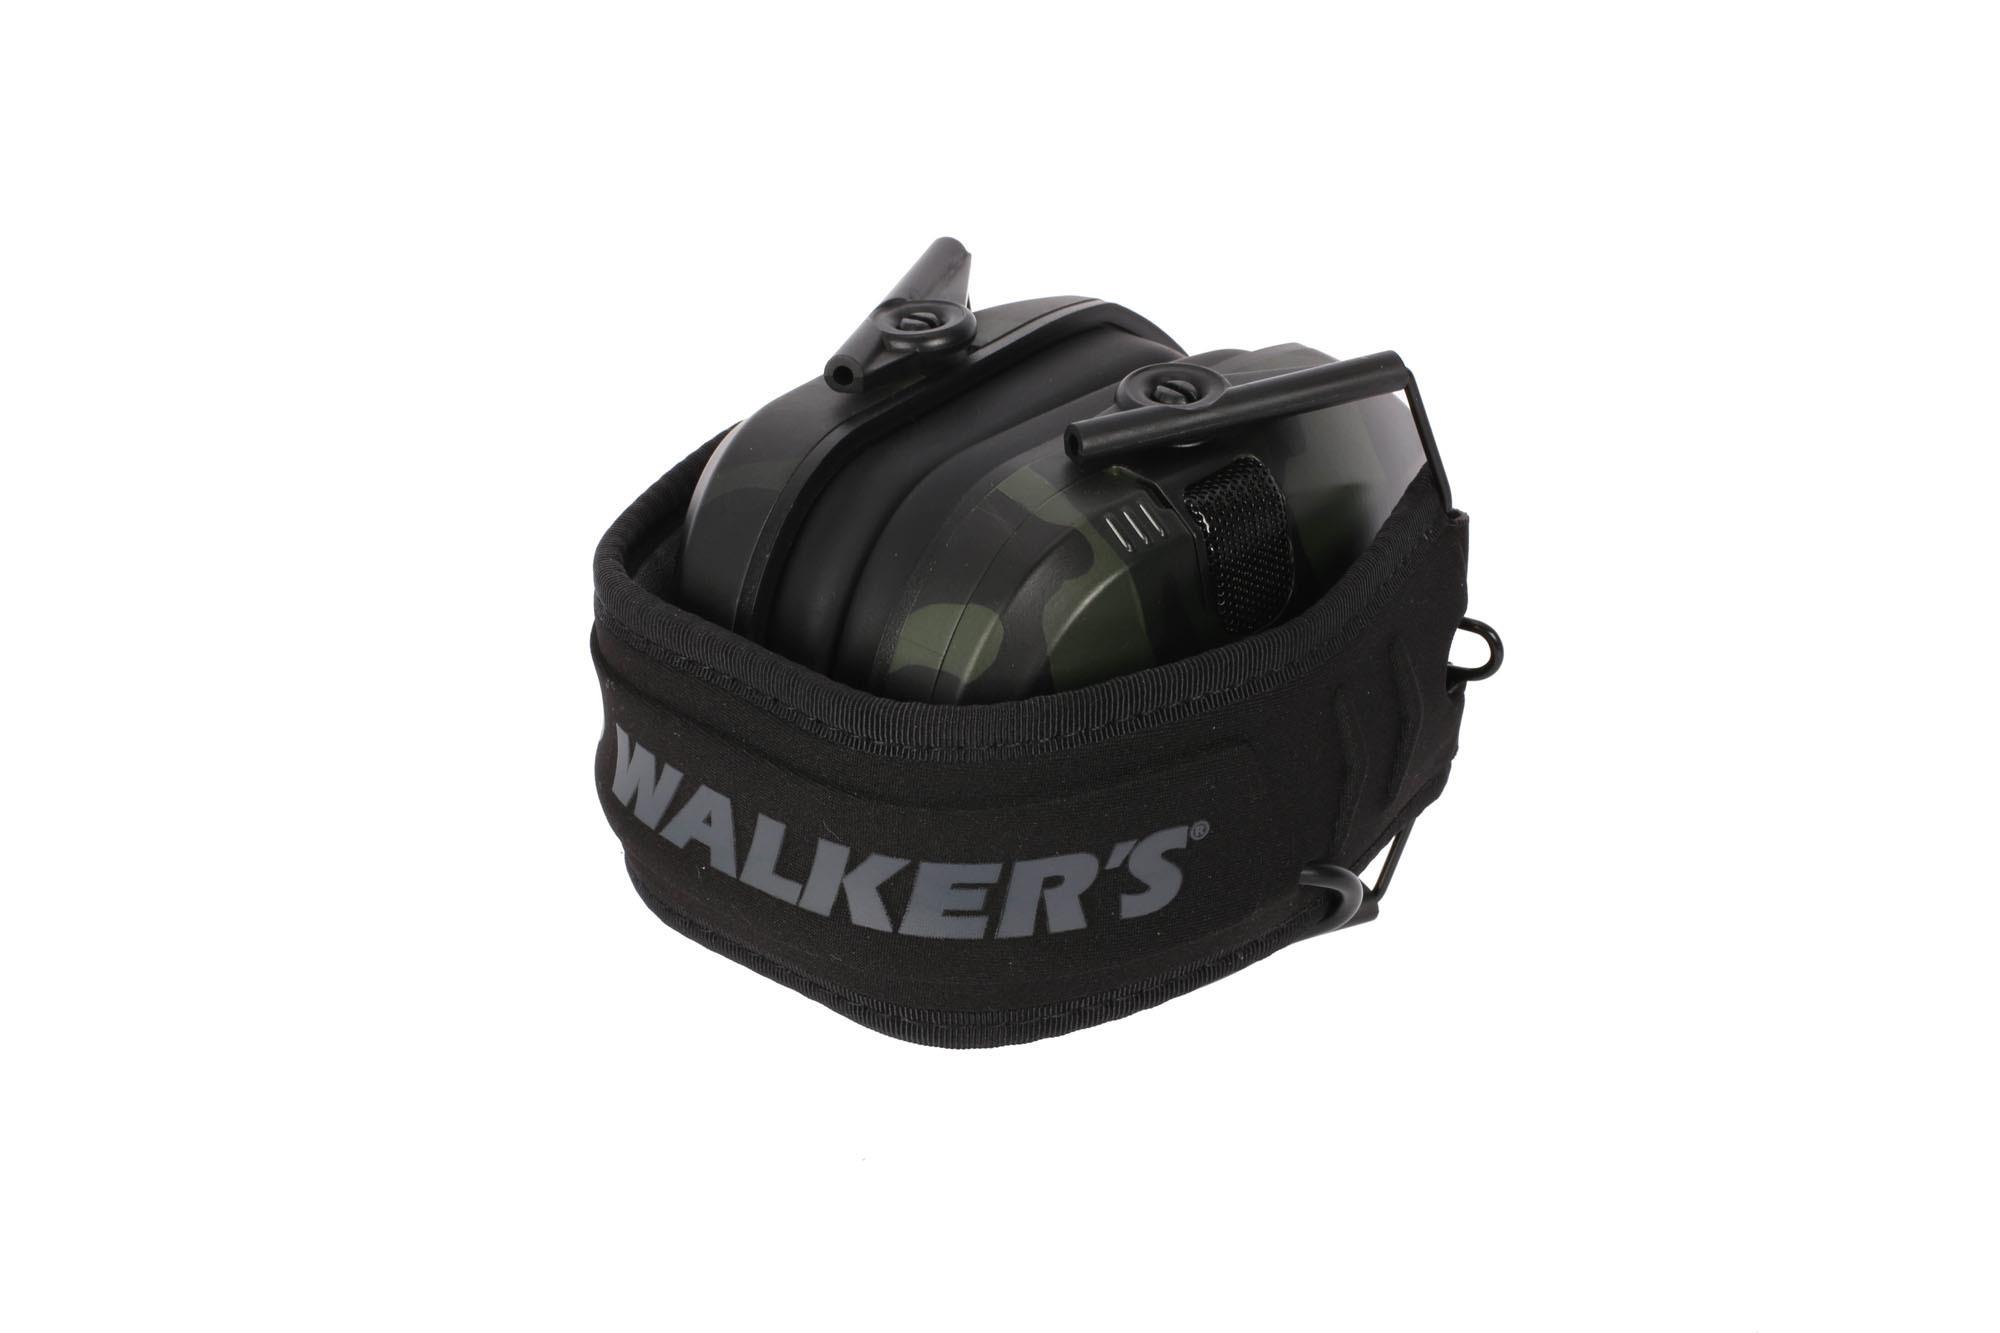 Walkers Razor Slim Electronic Muff (MultiCam Camo Gray) Bundle